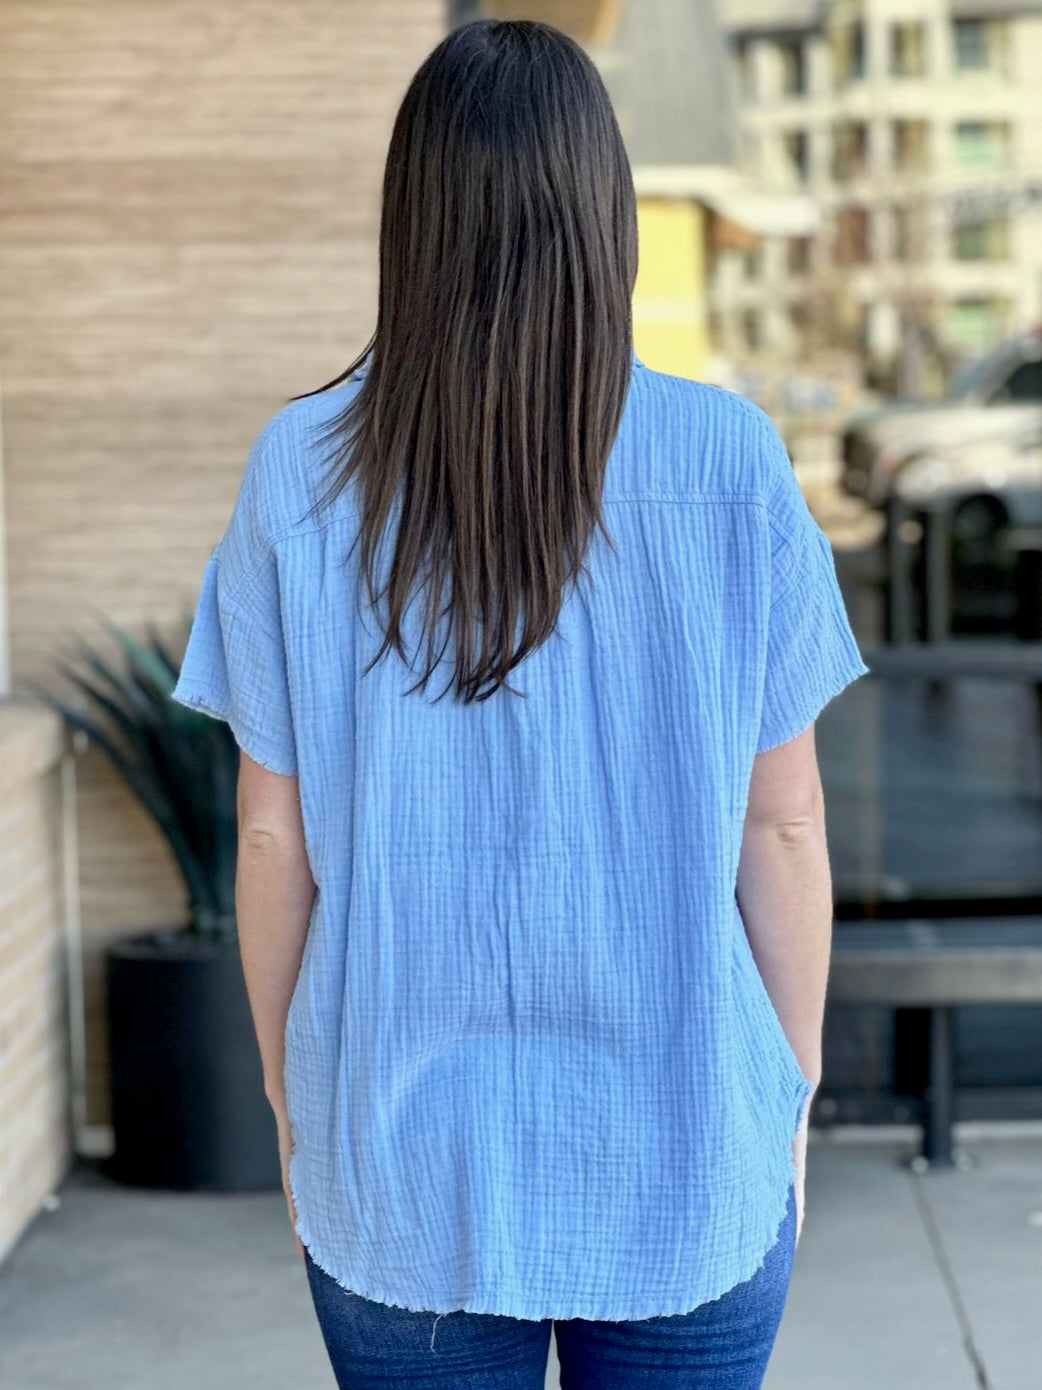 Megan in spring blue shirt back view